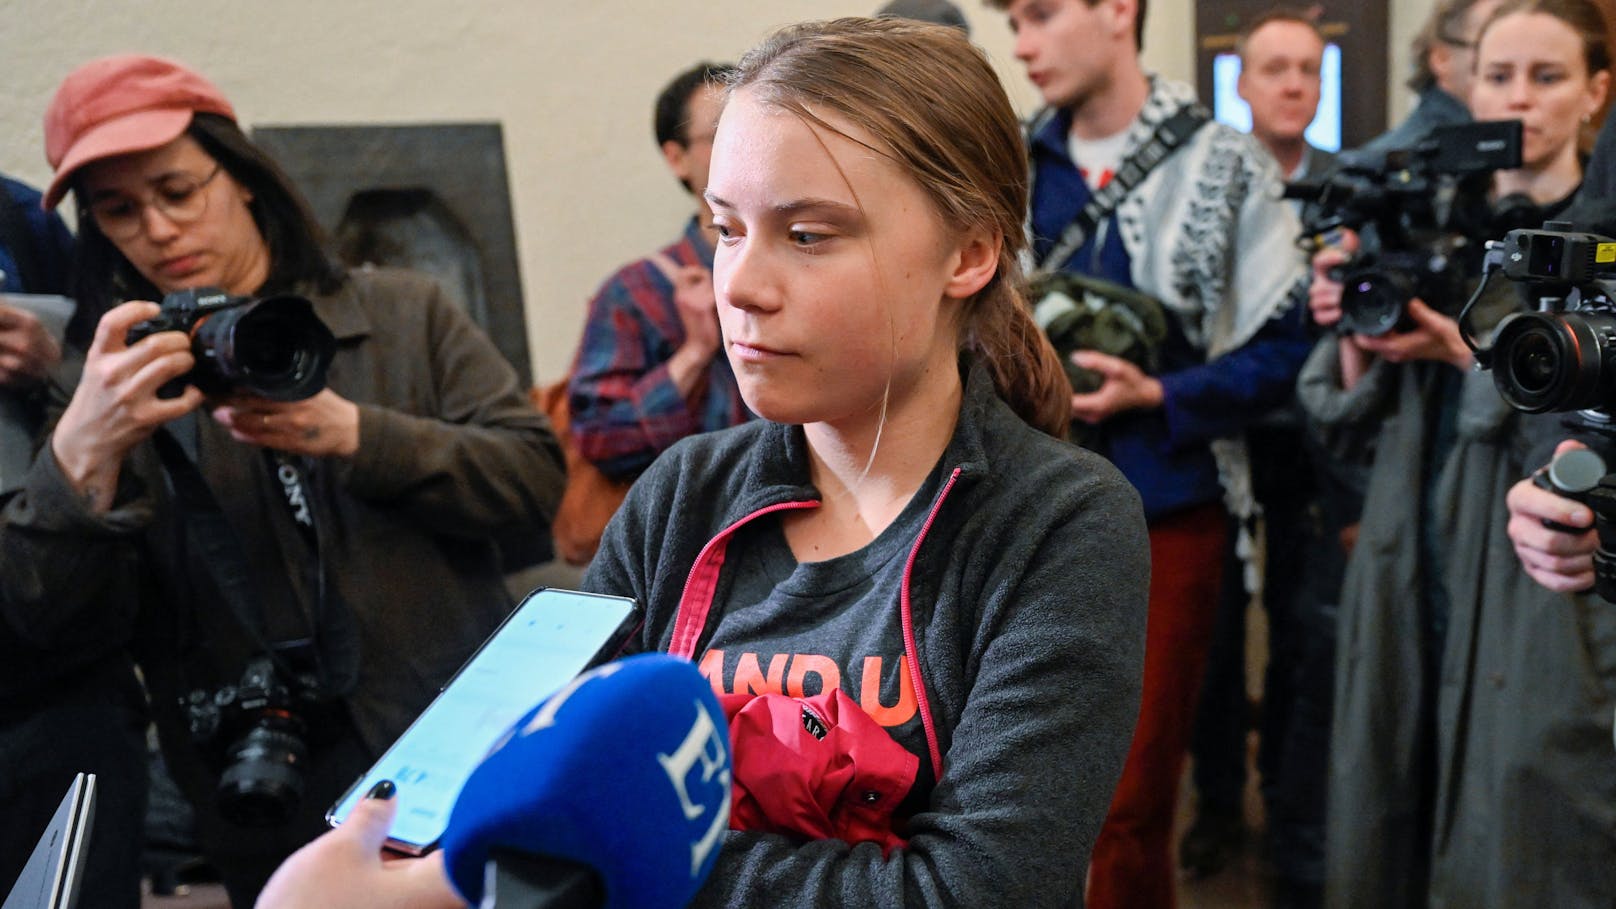 Klimaaktivistin Greta Thunberg verurteilt